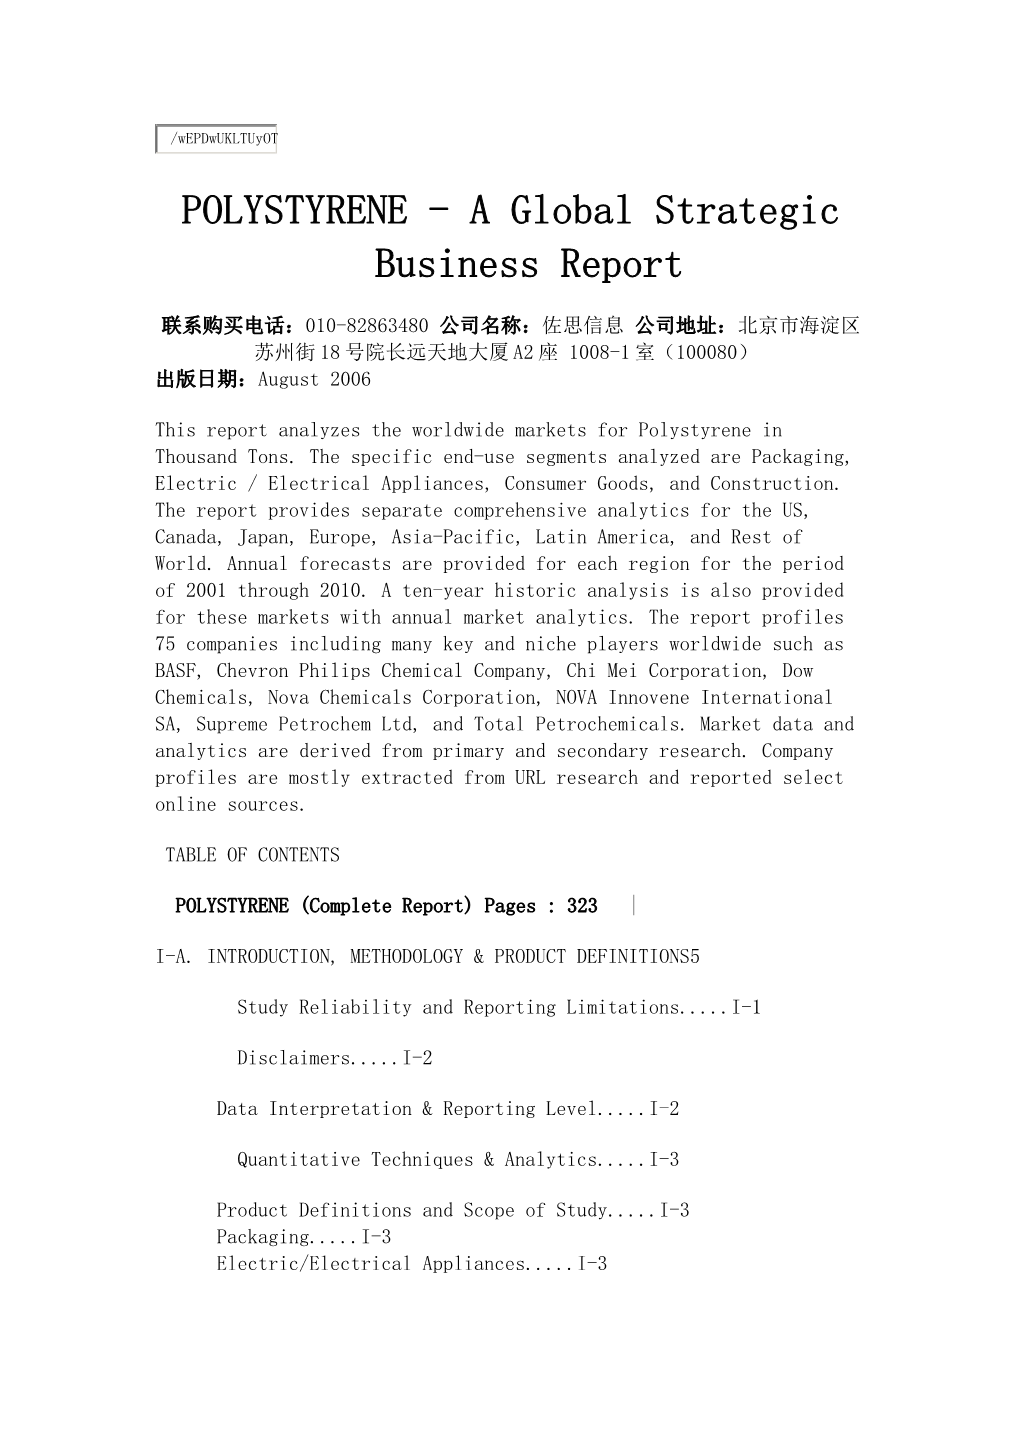 全球聚苯乙烯市场报告 POLYSTYRENE - a Global Strategic Business Report